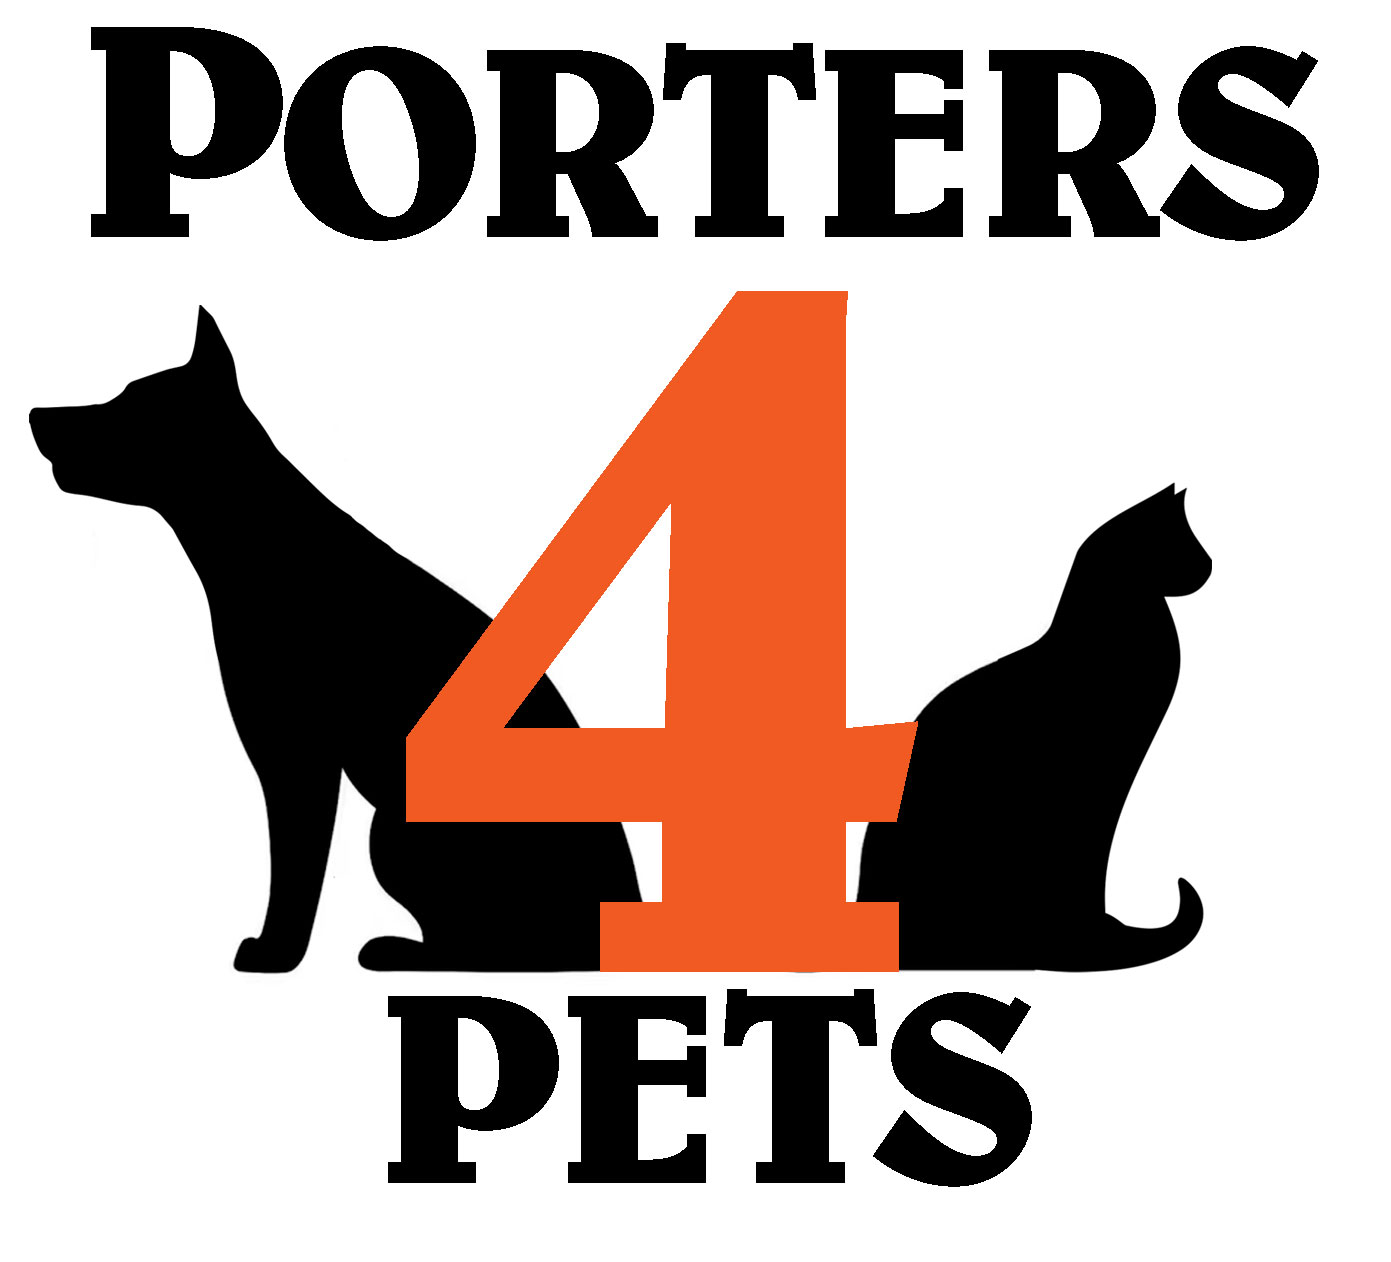 Porters 4 Pets 